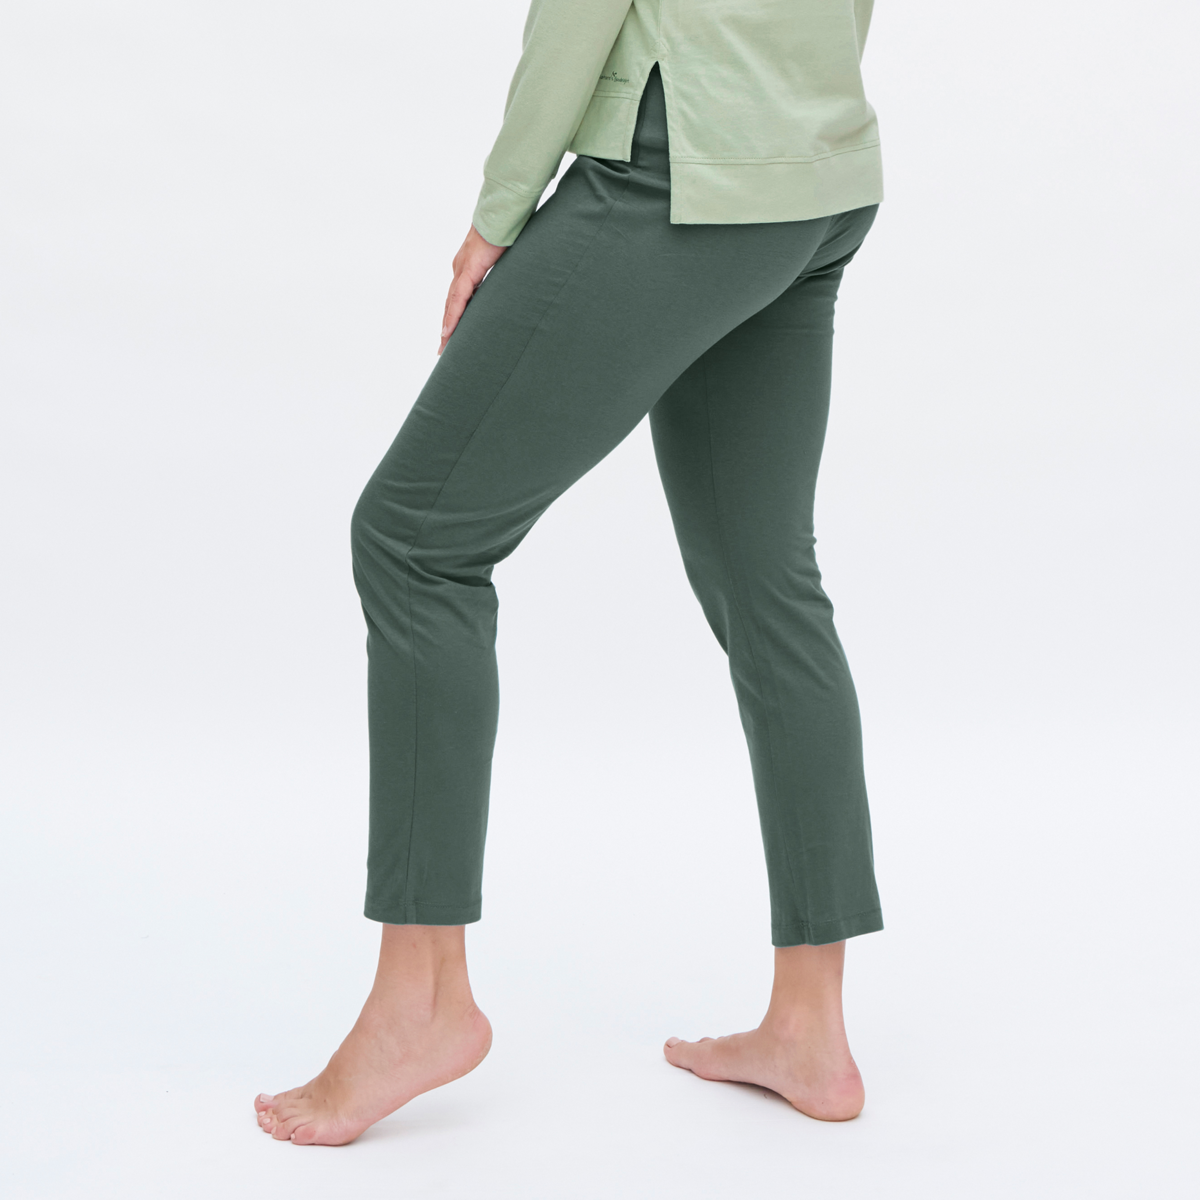 Green Women Sleep trousers